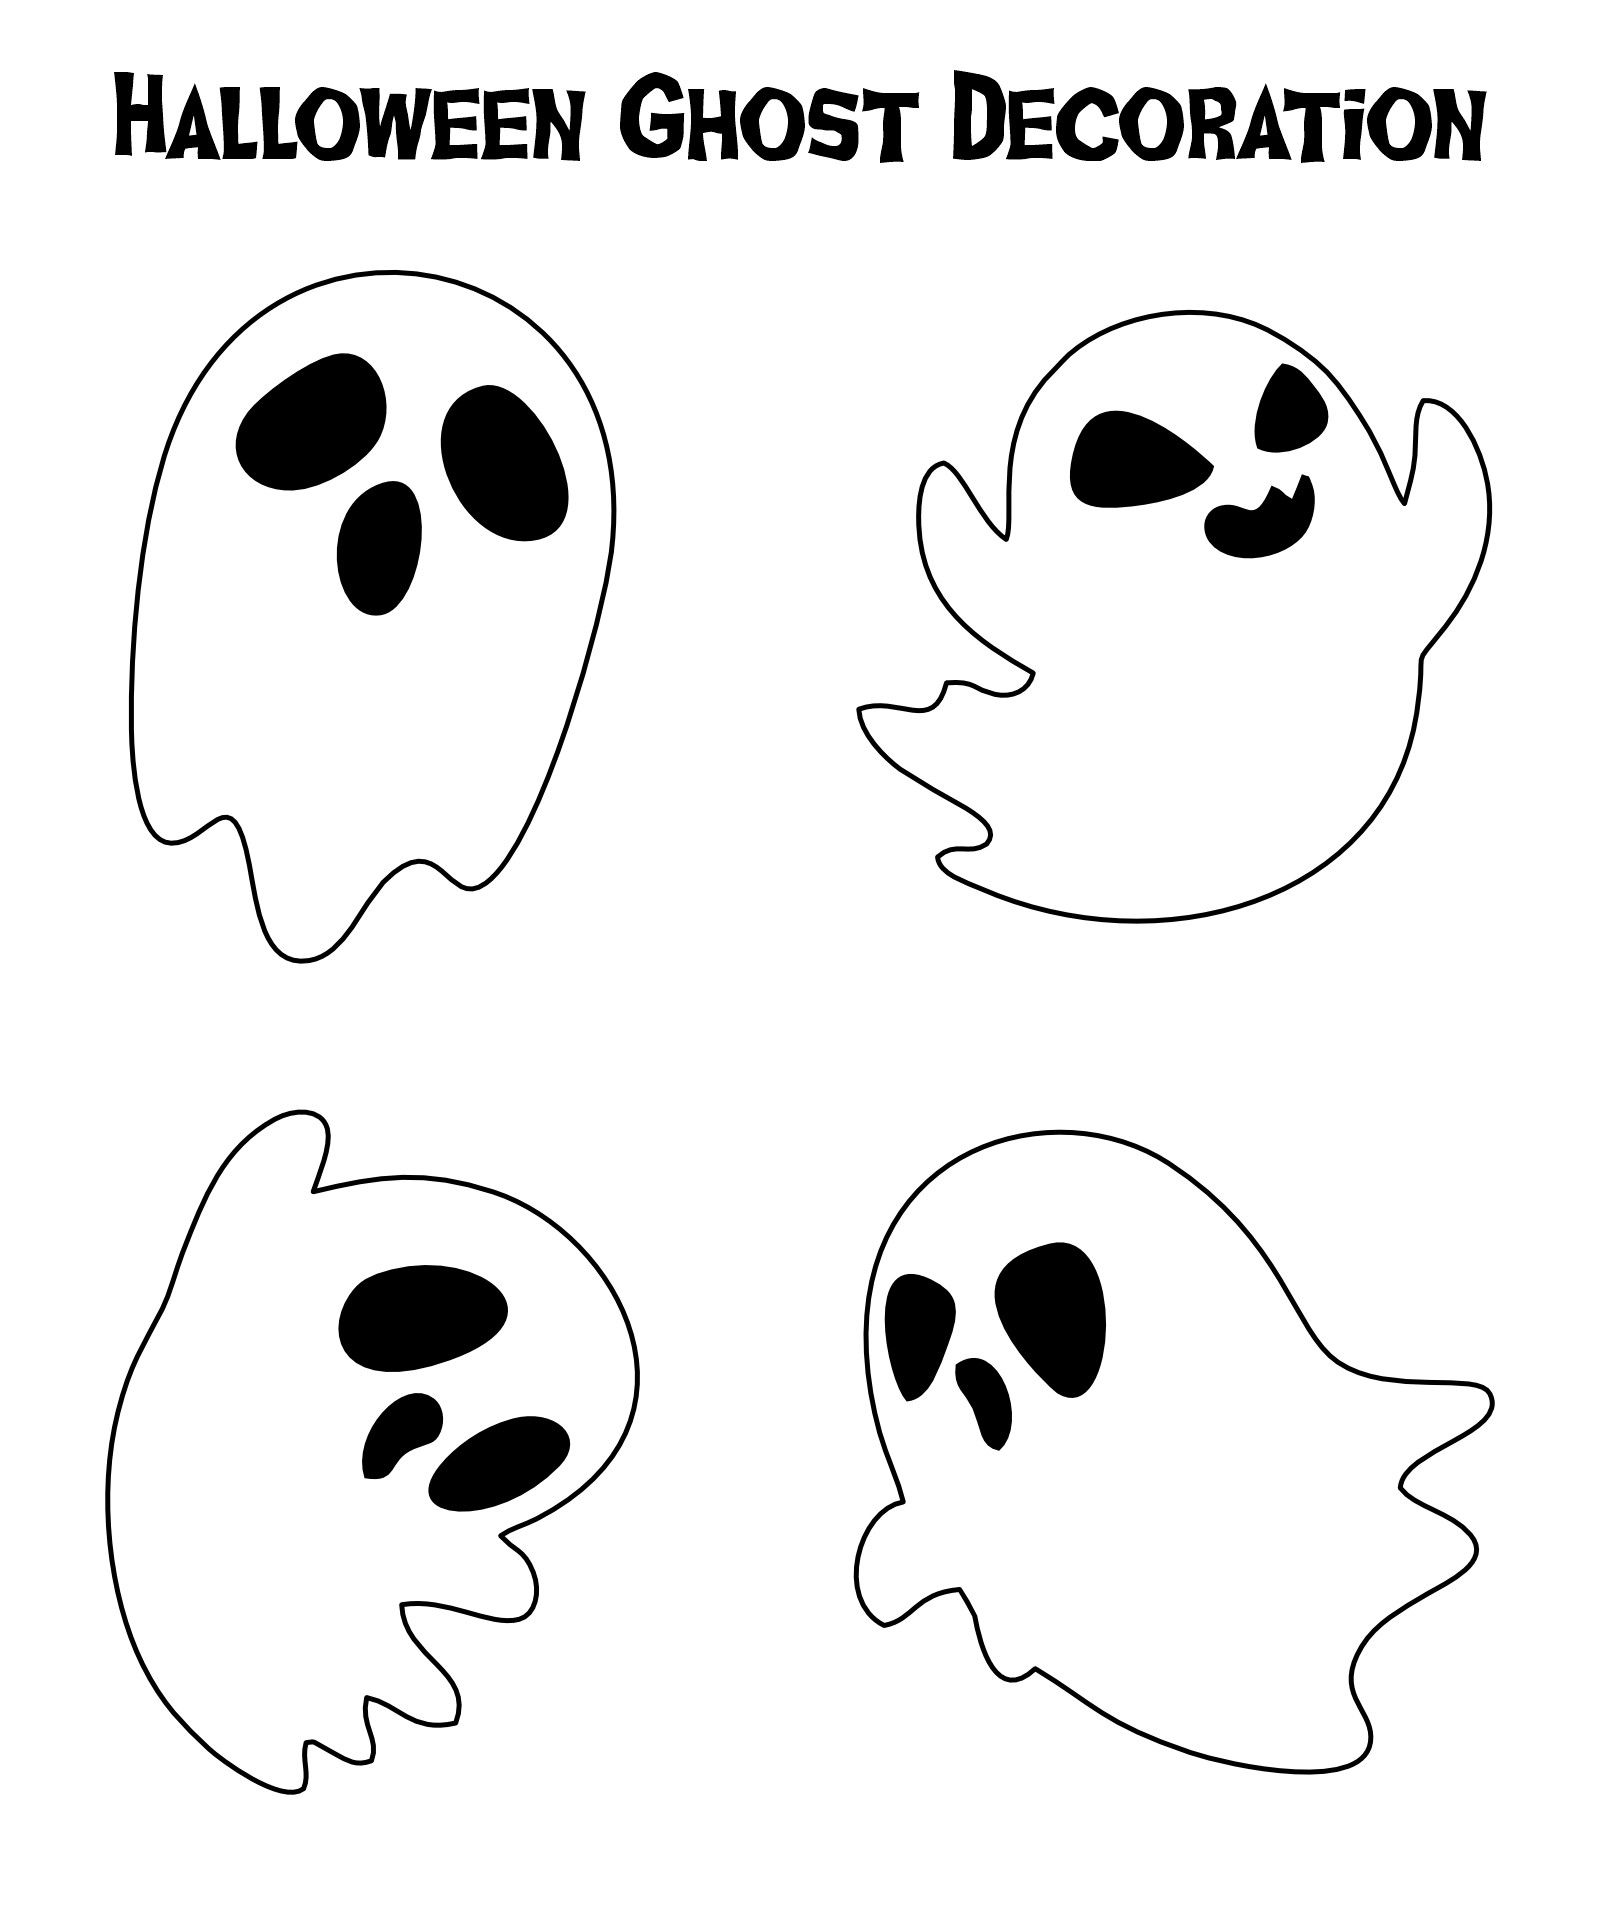 DIY Halloween Ghost Decorations Printable